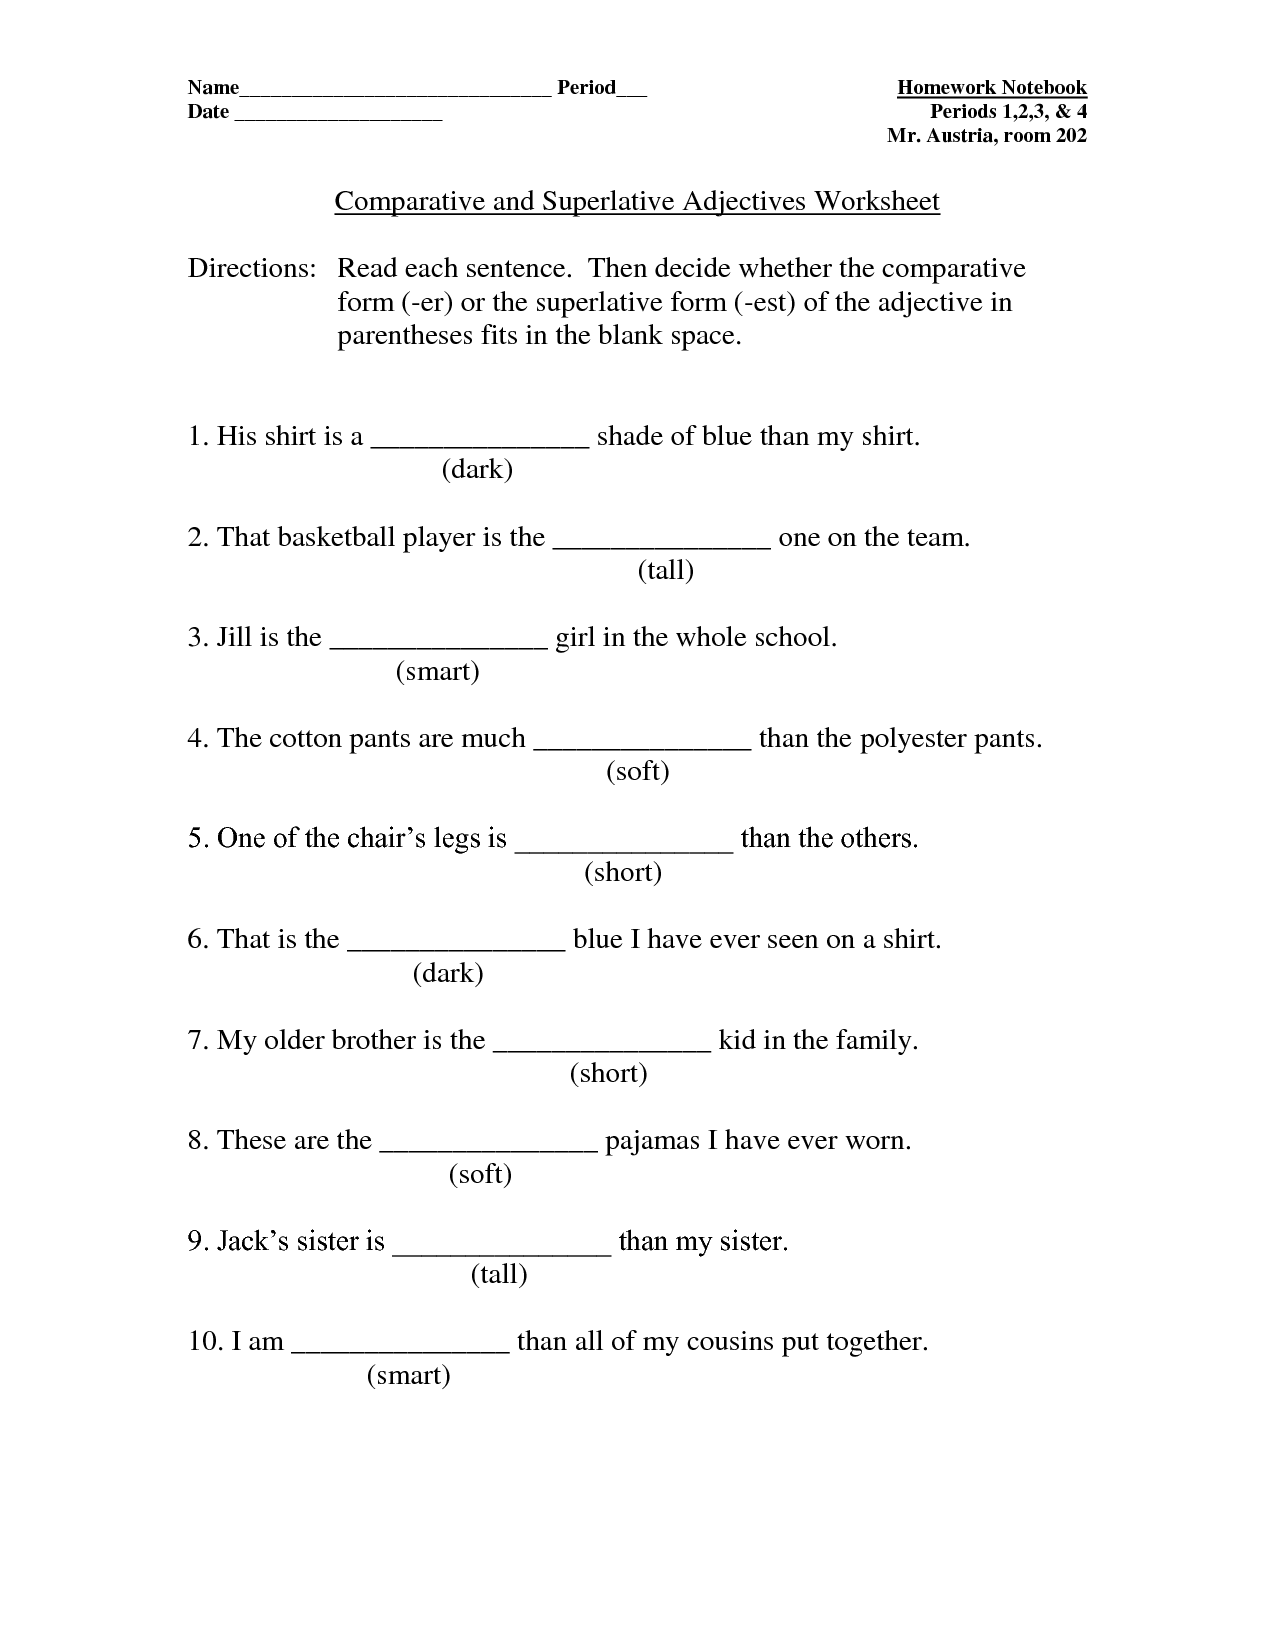 comparatives-and-superlatives-short-adjectives-esl-worksheet-by-sictireala8